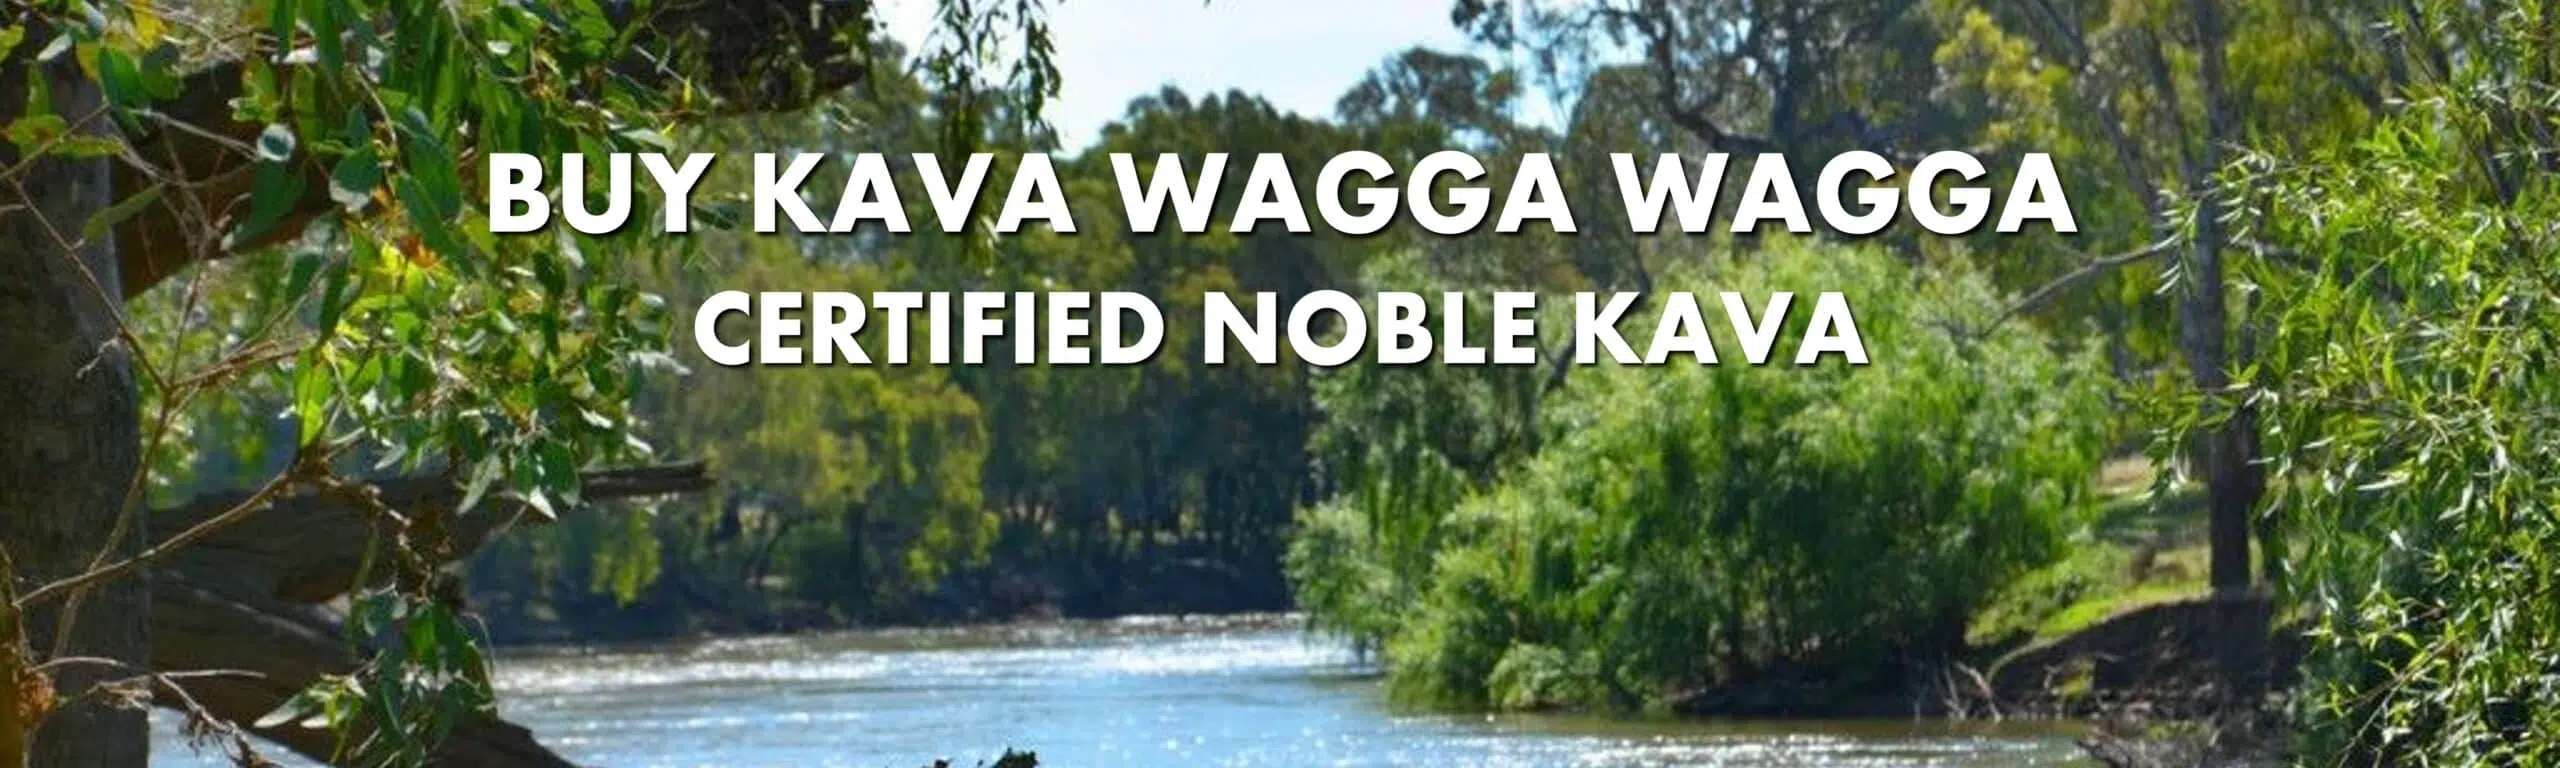 Murrumbidgee River scene near Wagga Wagga New South Wales with caption Buy Kava Wagga Wagga Certified Noble Kava